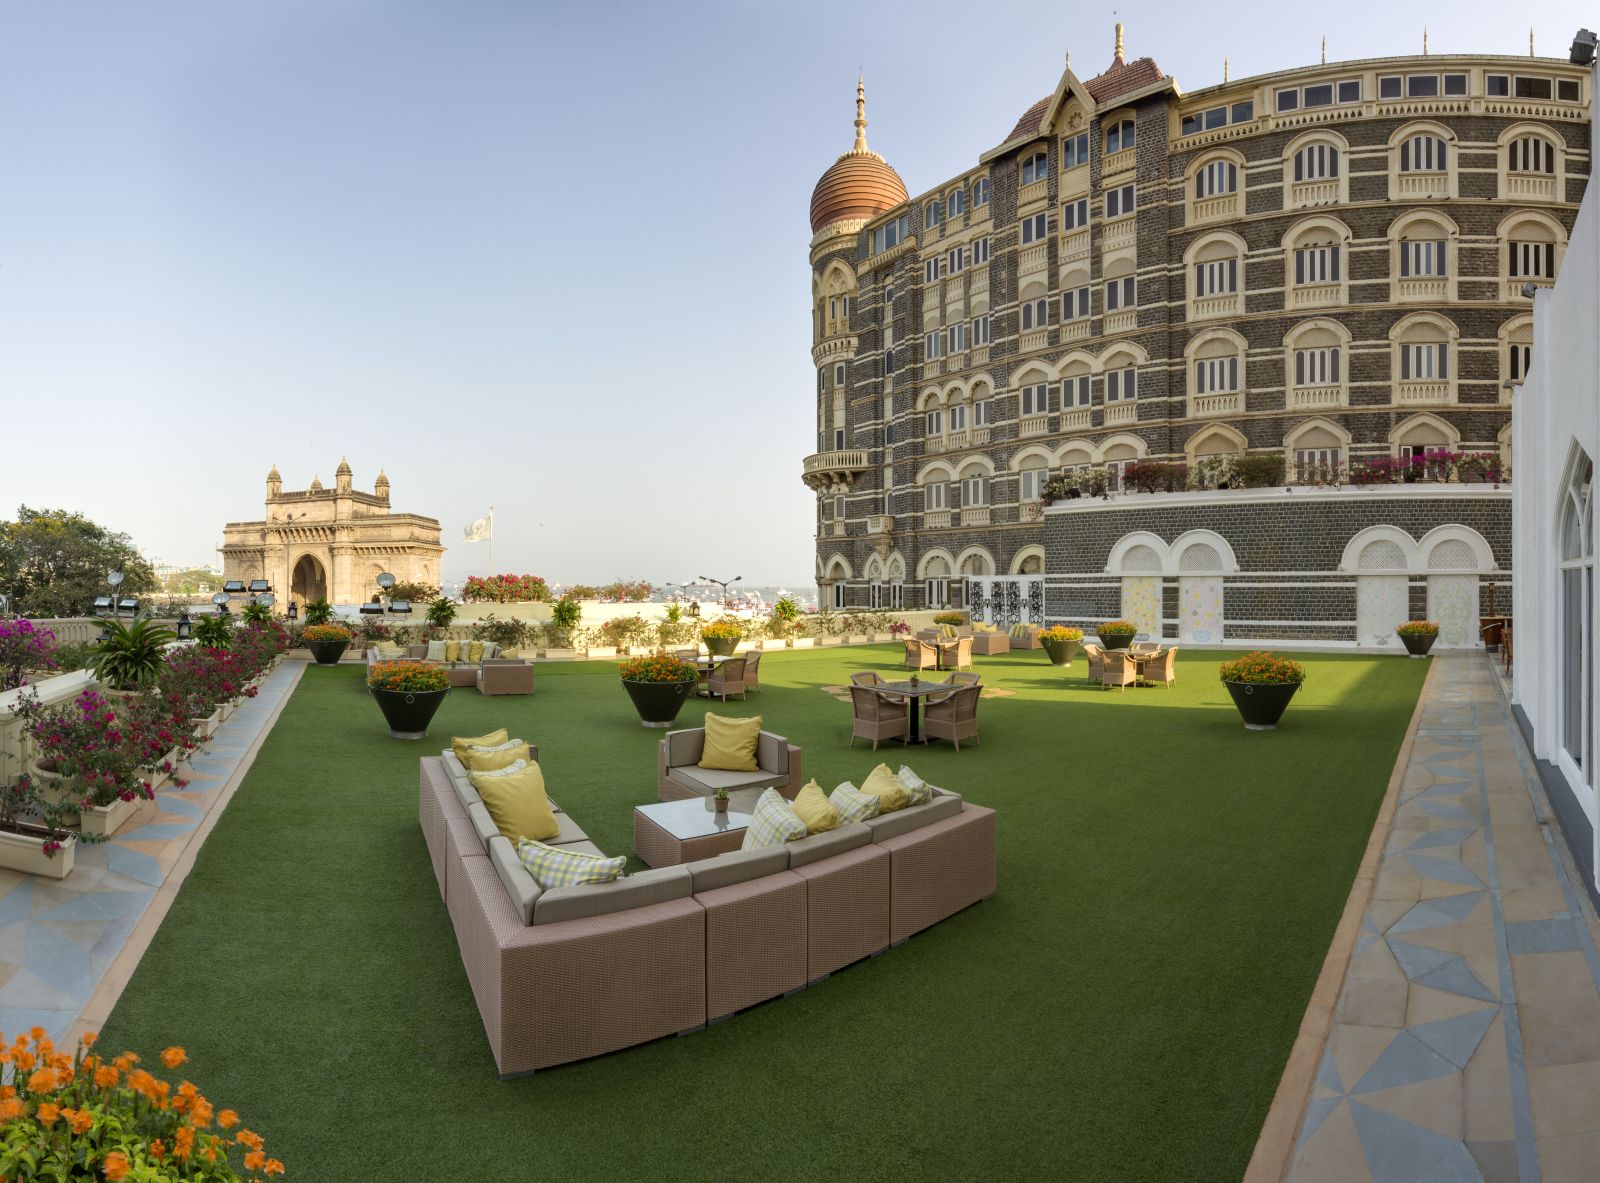 Terrace and grounds of the Taj Mahal Palace hotel in Mumbai